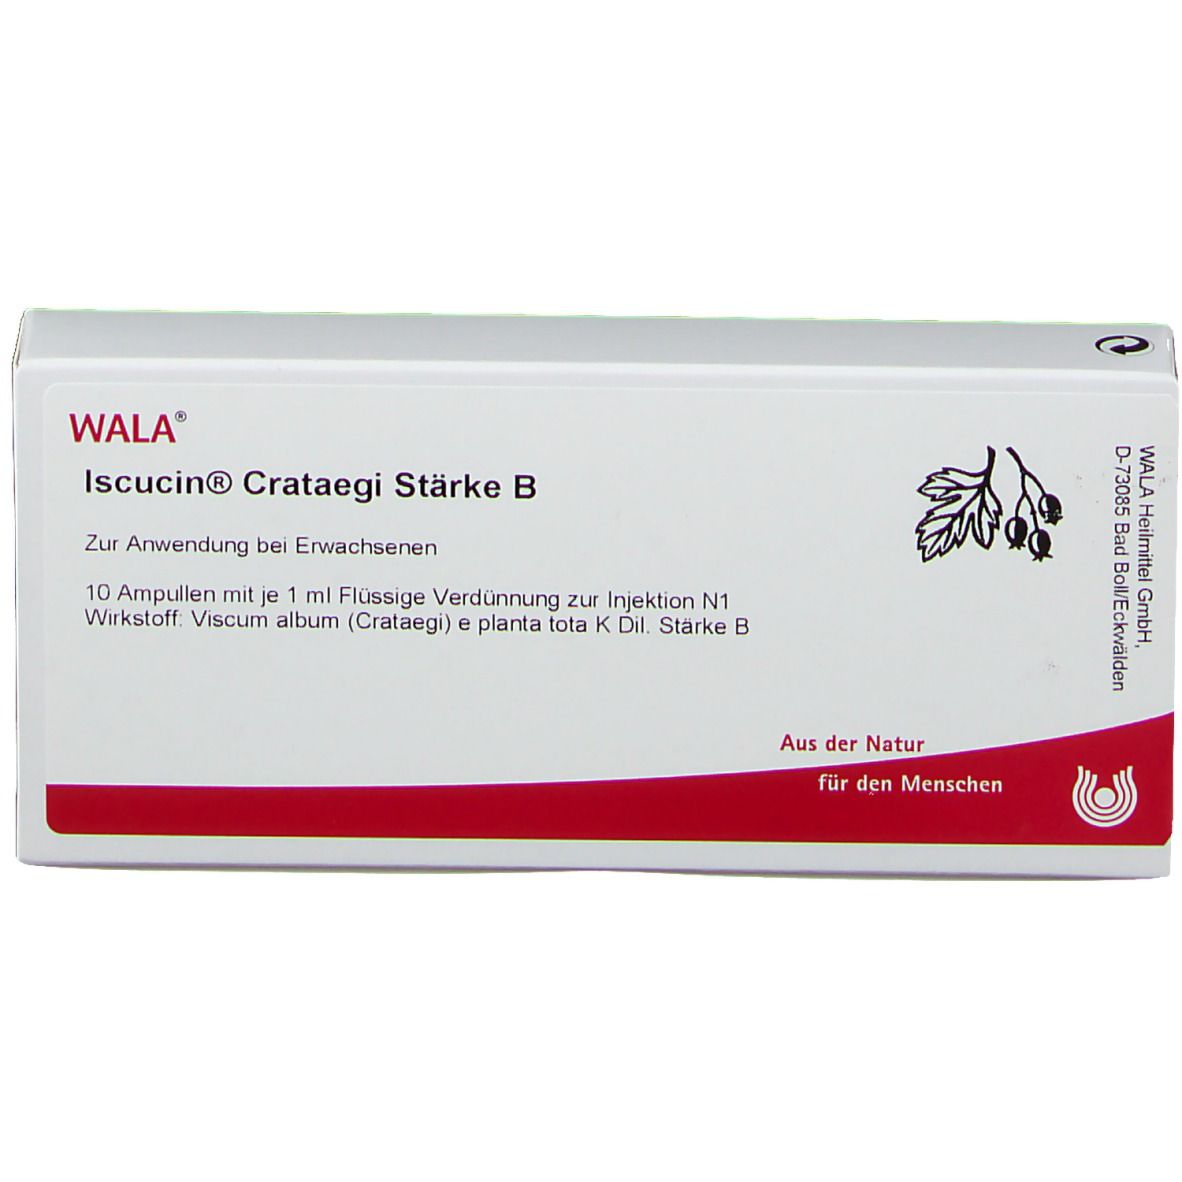 WALA® Iscucin Crataegi Stärke B Ampullen